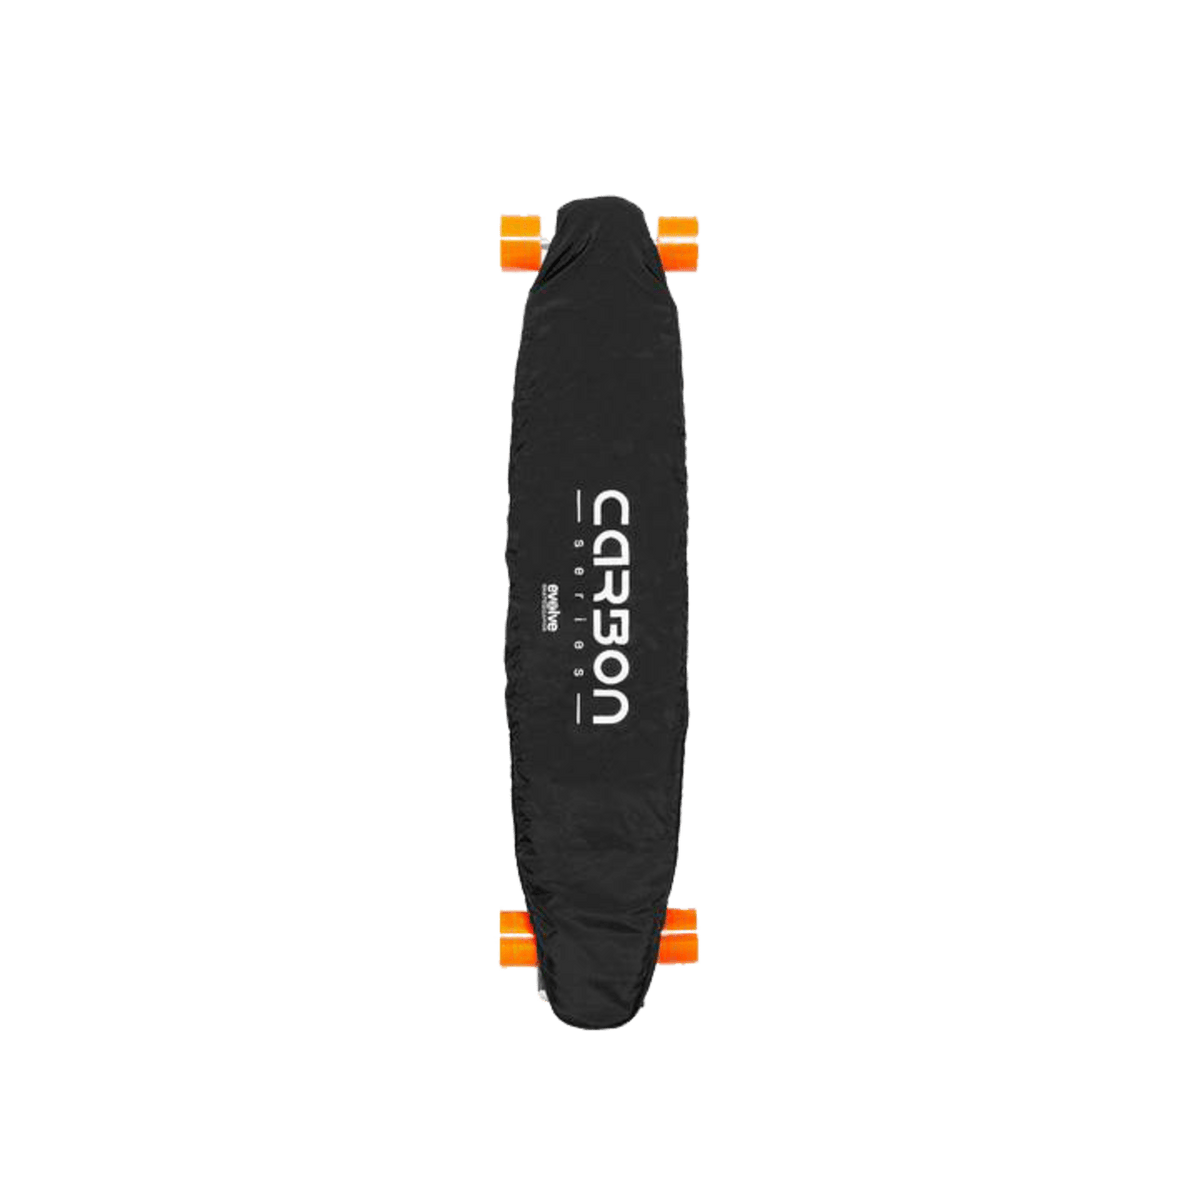 Evolve Skateboard Deck Covers